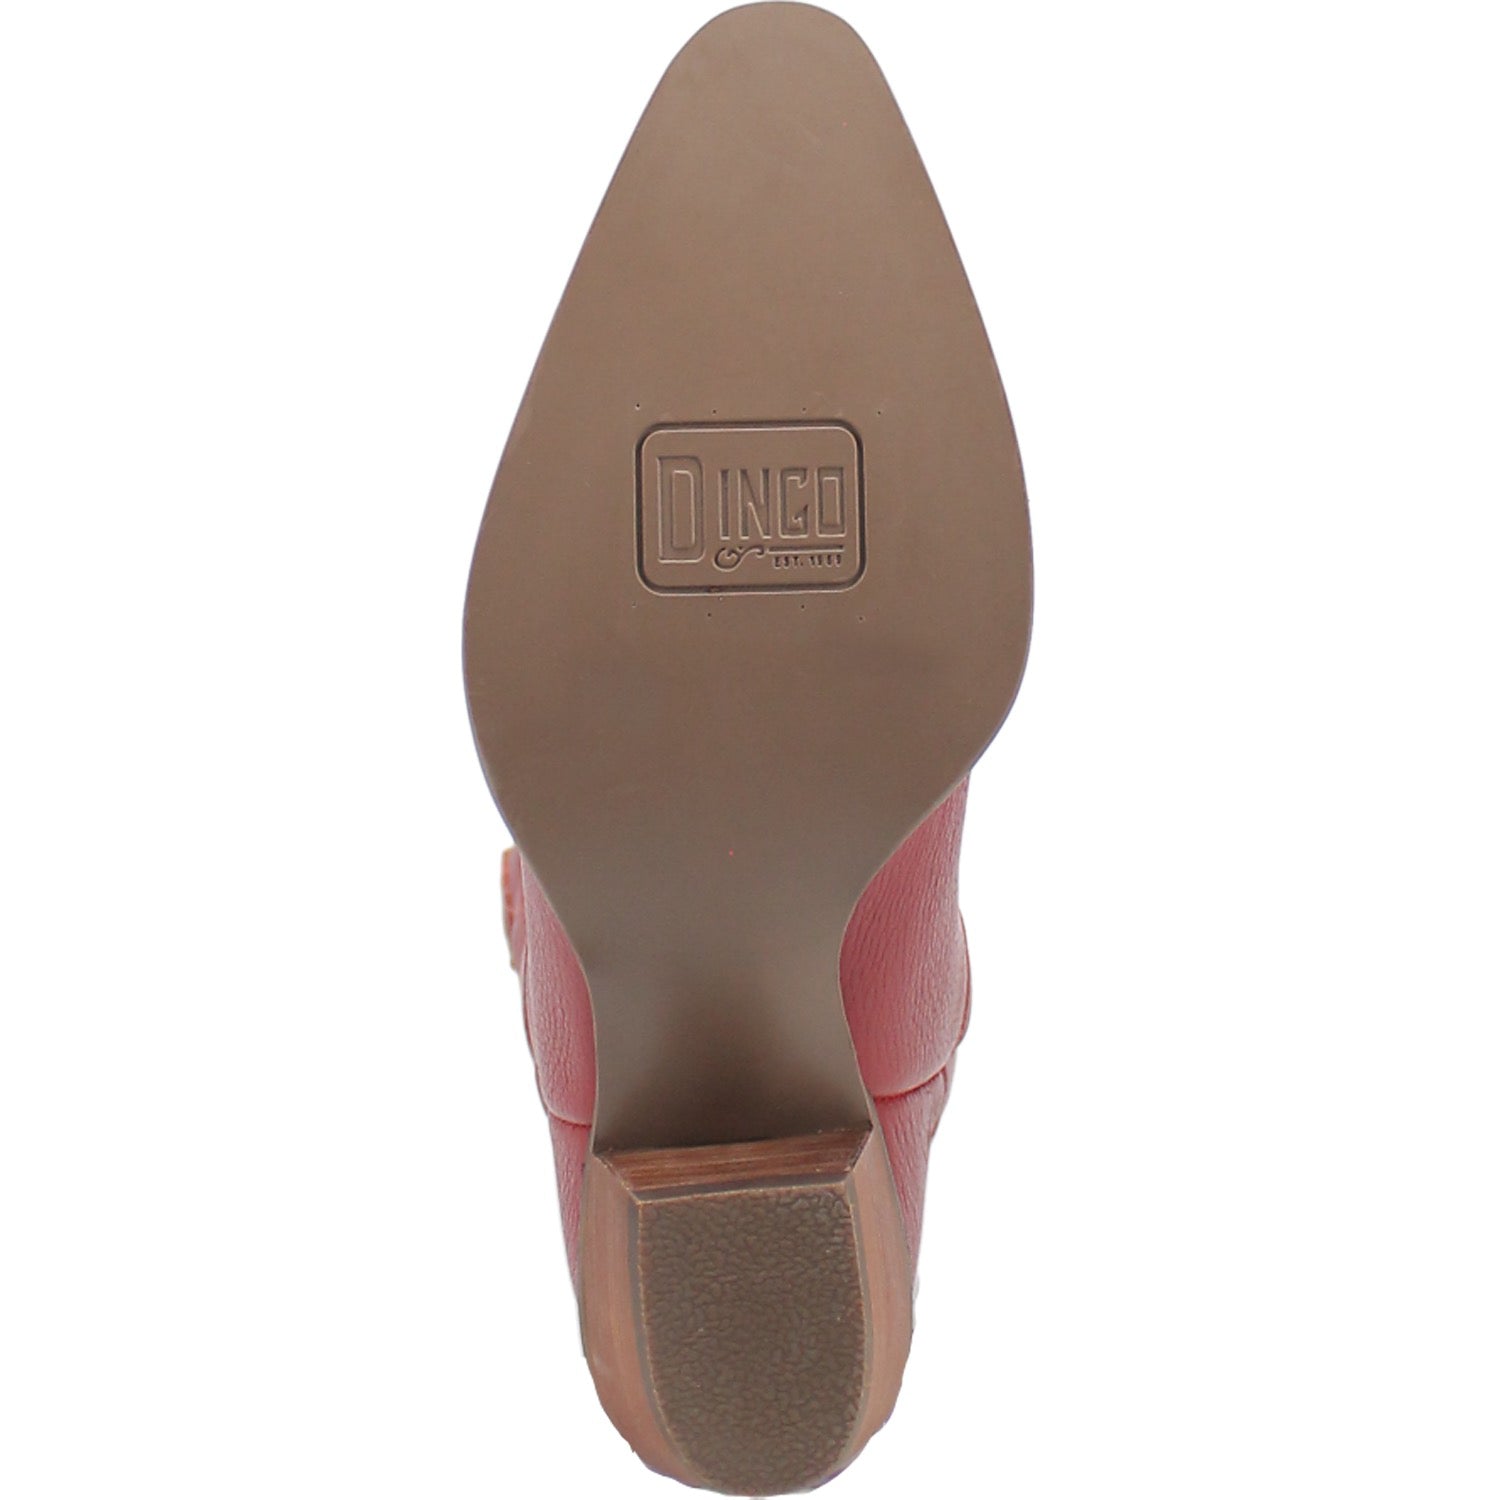 Dingo Ladies High Cotton Red Snip Toe Boots